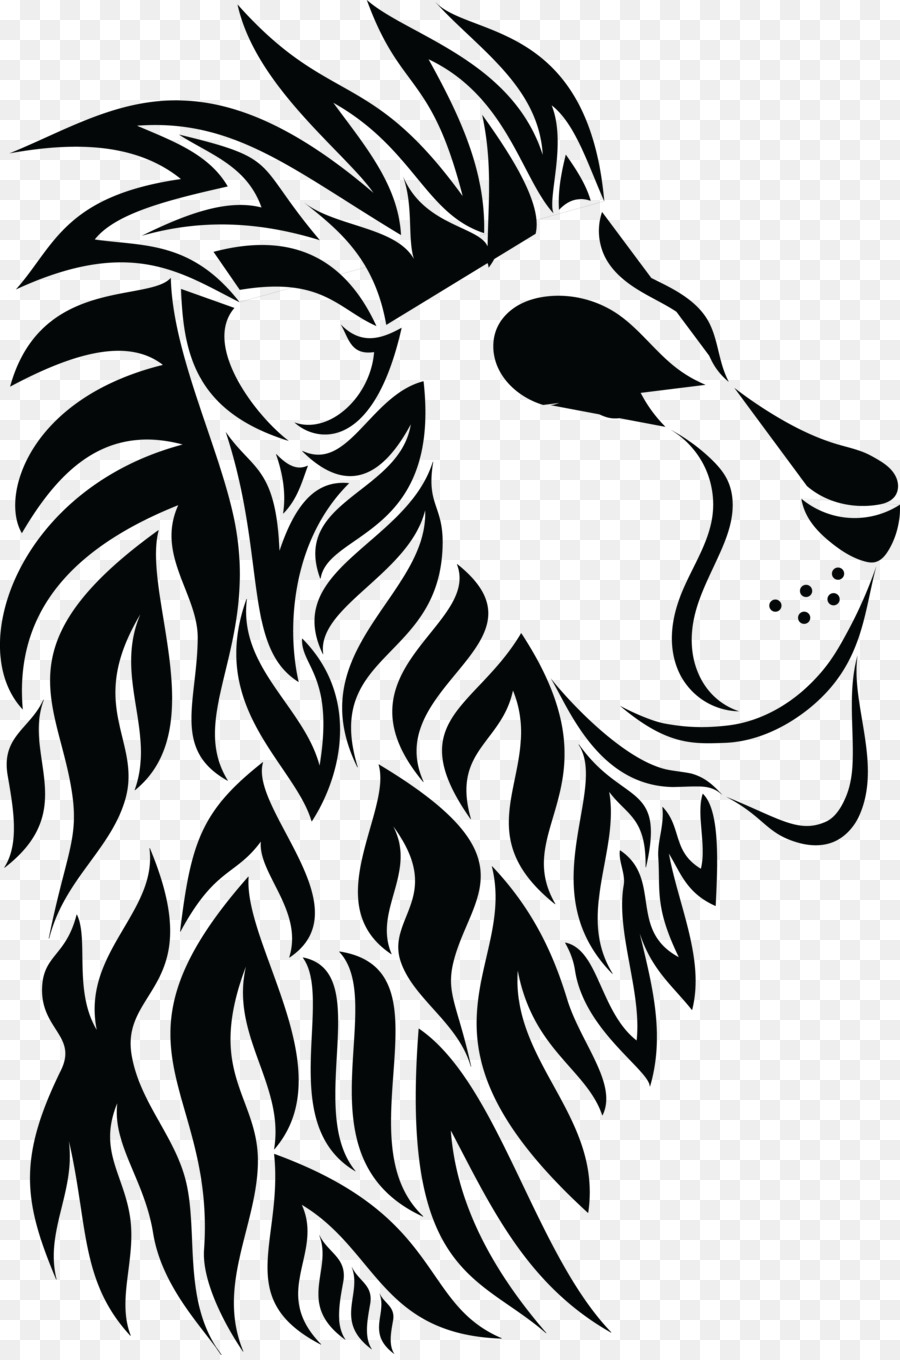 Lionhead rabbit Sea lion Tattoo Wildebeest - Lions Head png download - 4000*6022 - Free Transparent Lion png Download.